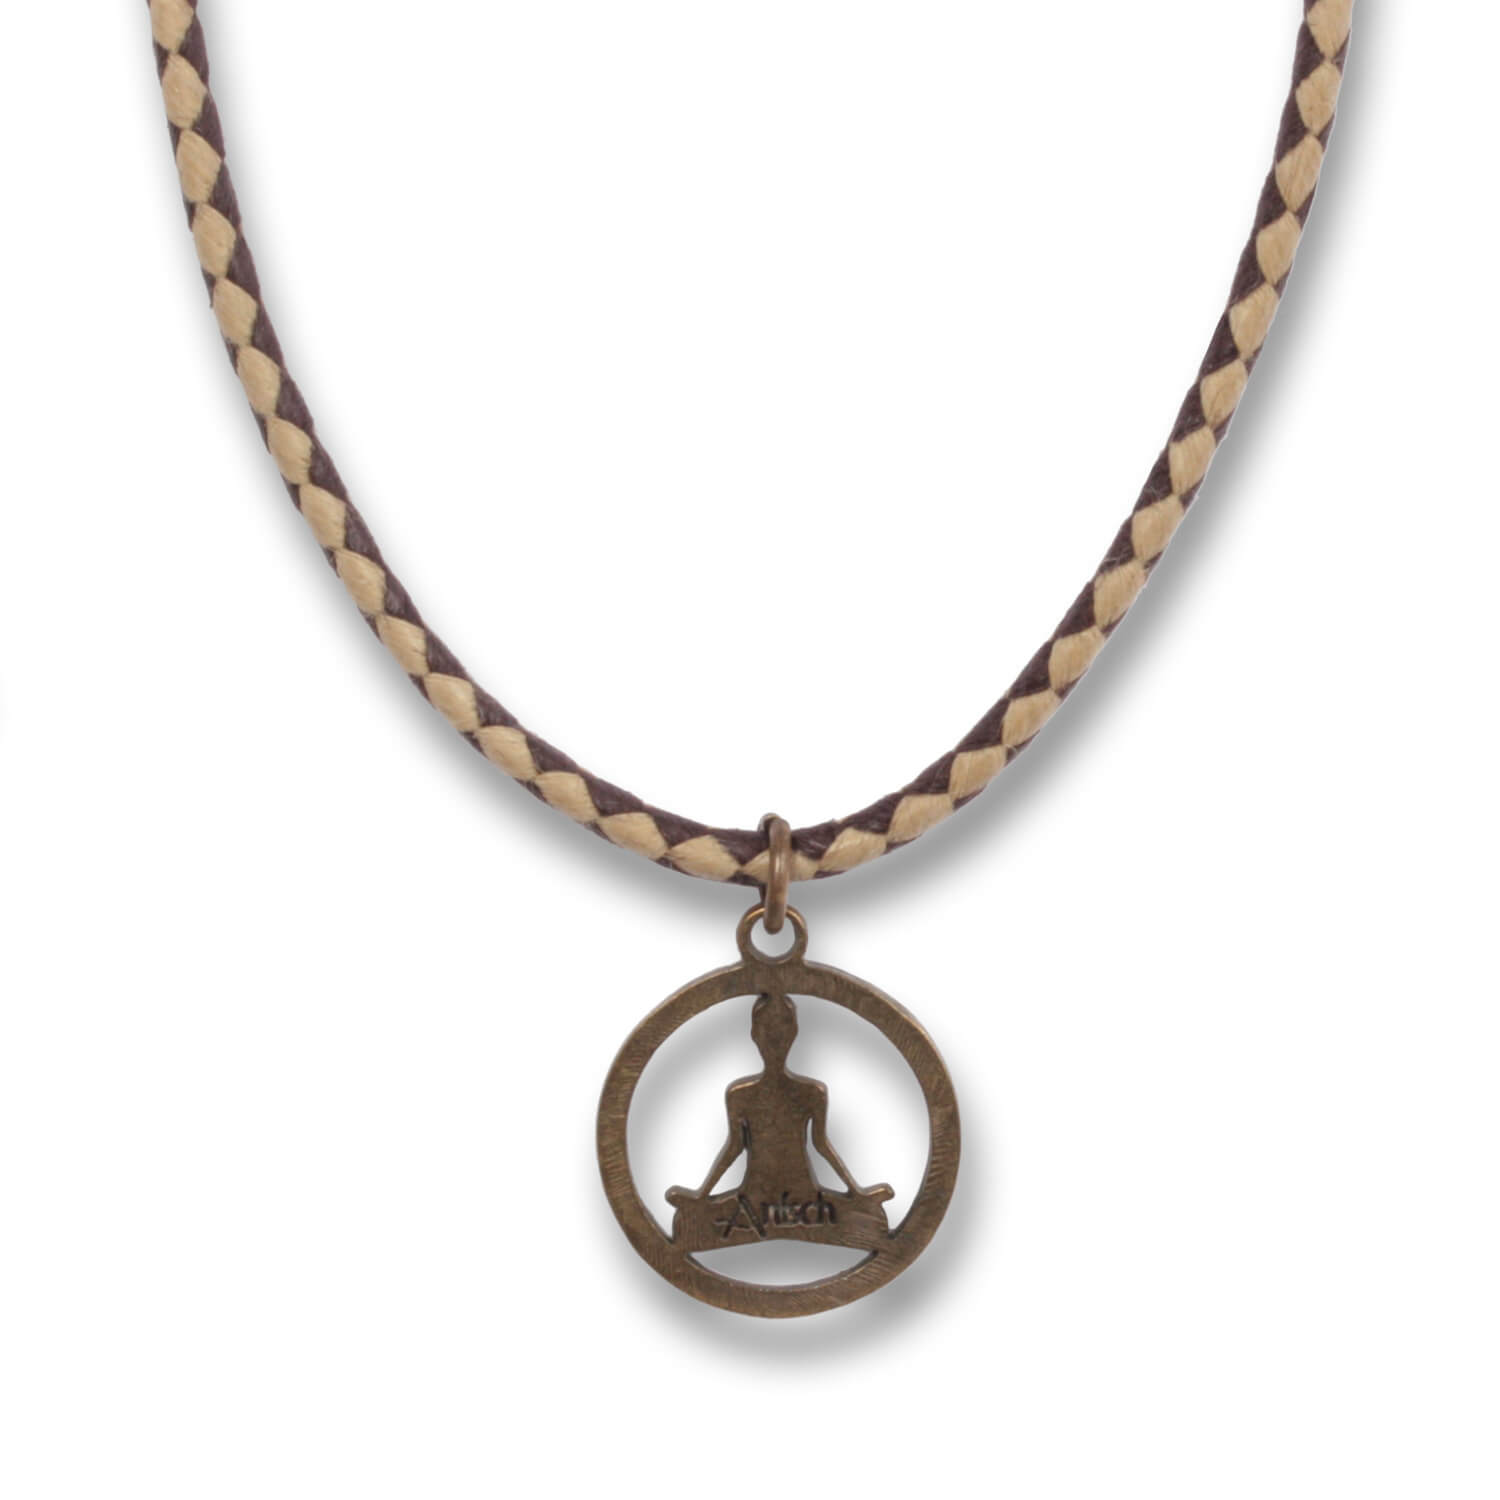 Mindfulness Circle - Indian Symbols Herren-Kette Antique Brass aus Baumwolle, 44 cm lang